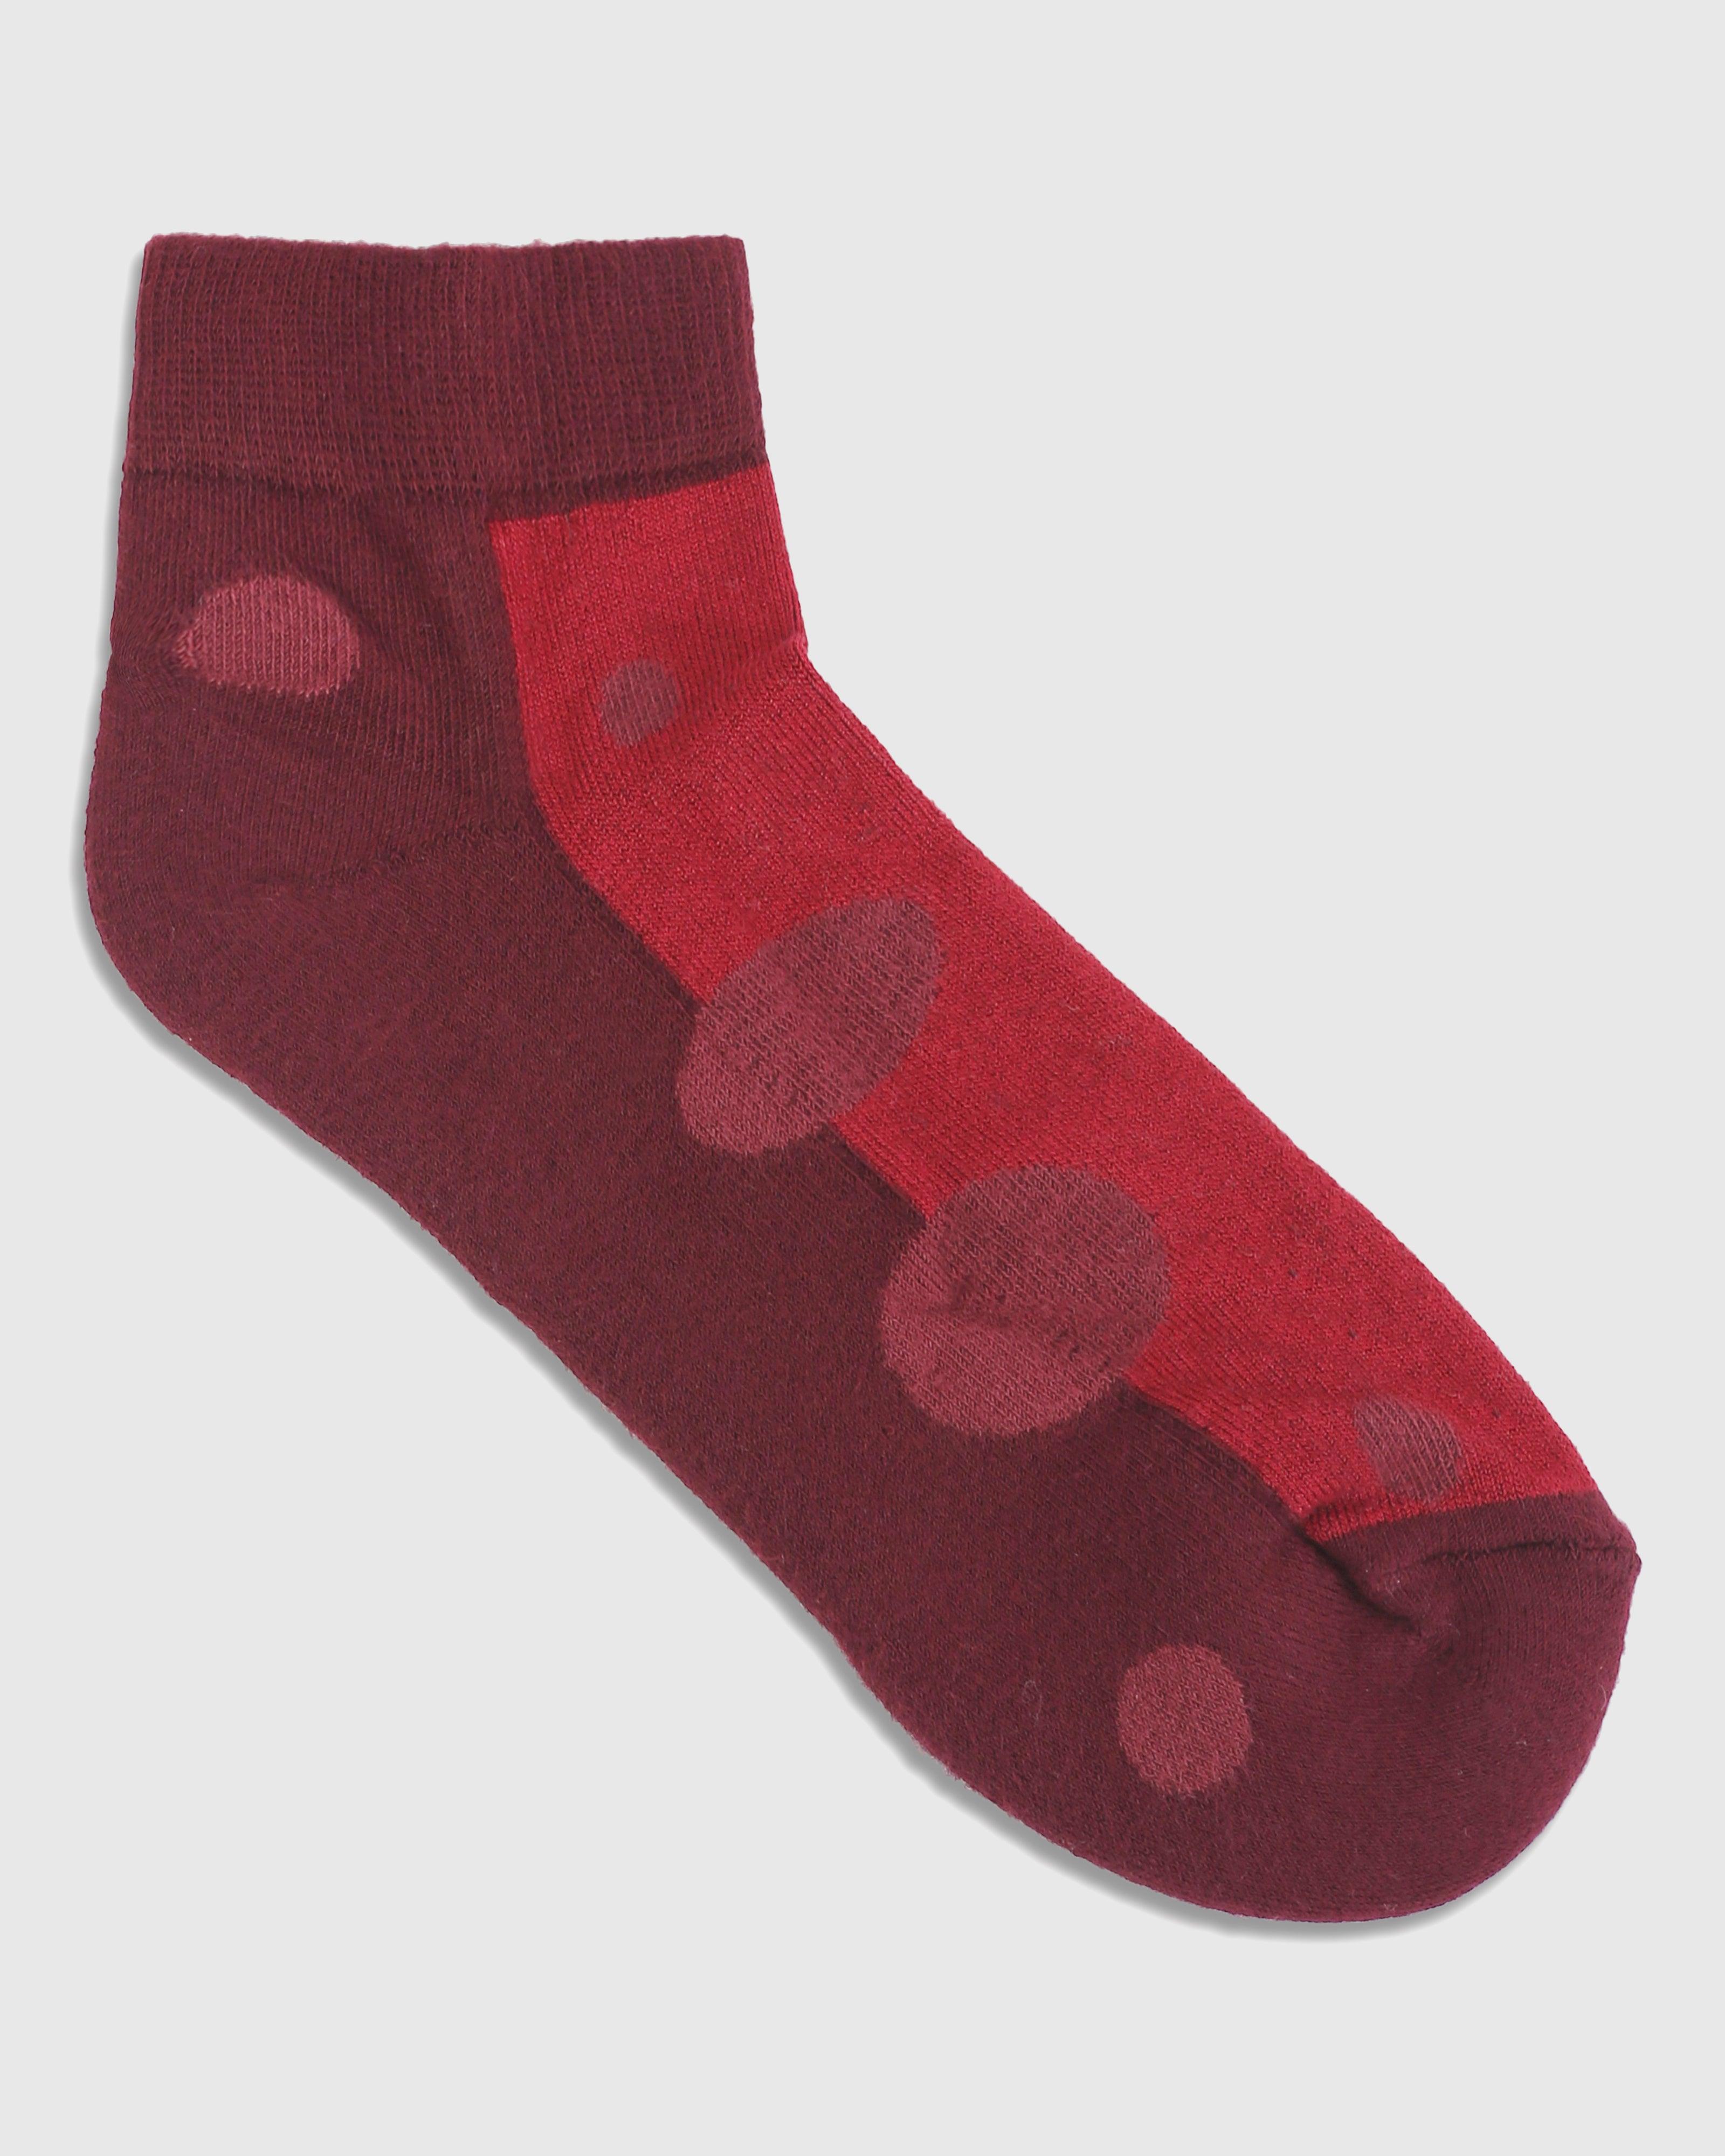 Cotton Multi Color Printed Socks - Pace